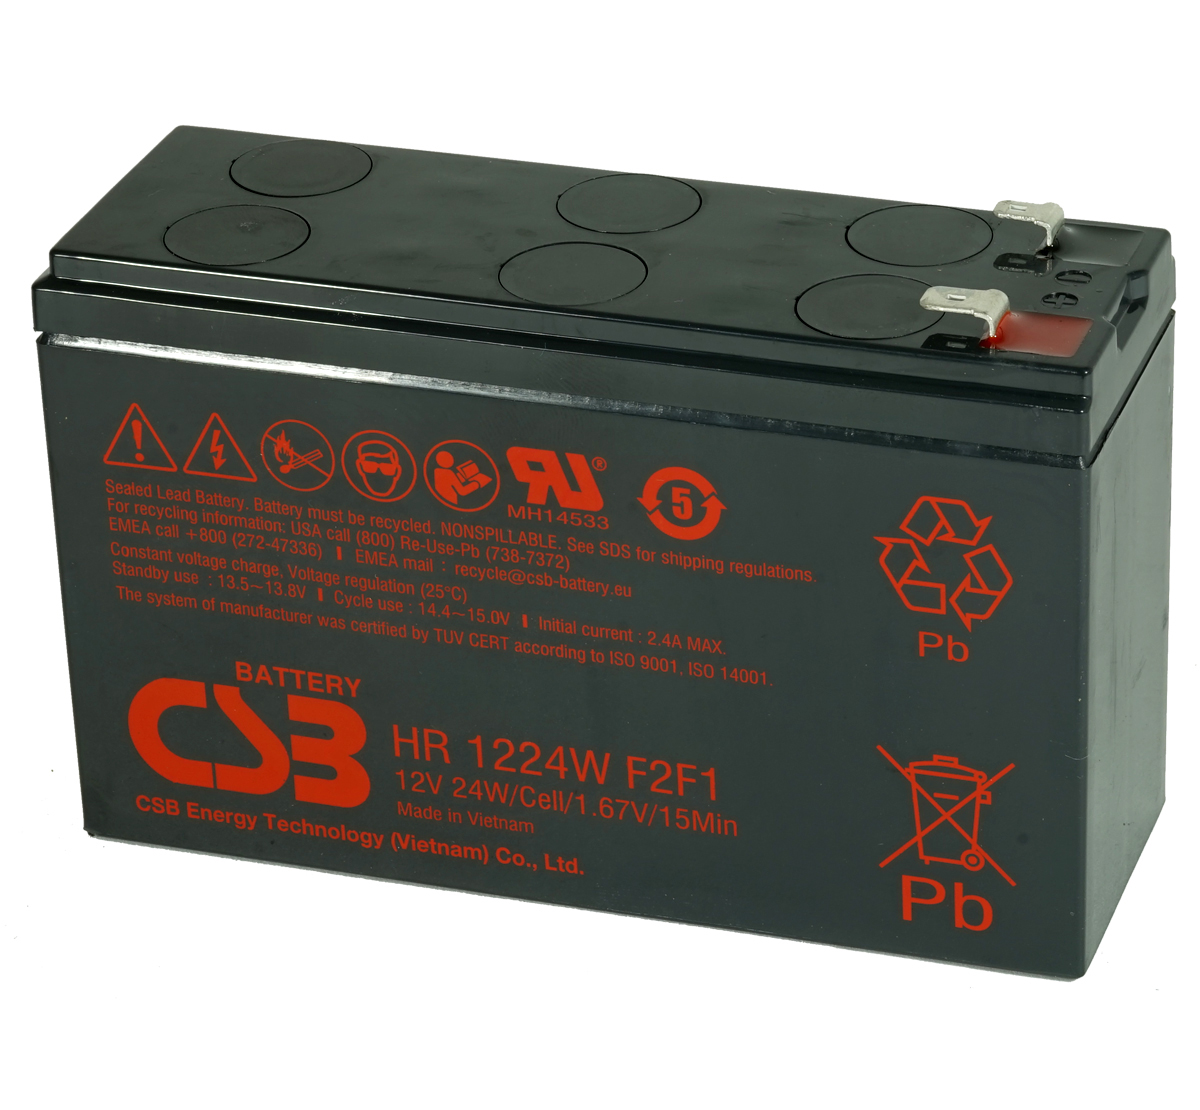 MDS125 UPS Battery Kit - Replaces APC RBC125